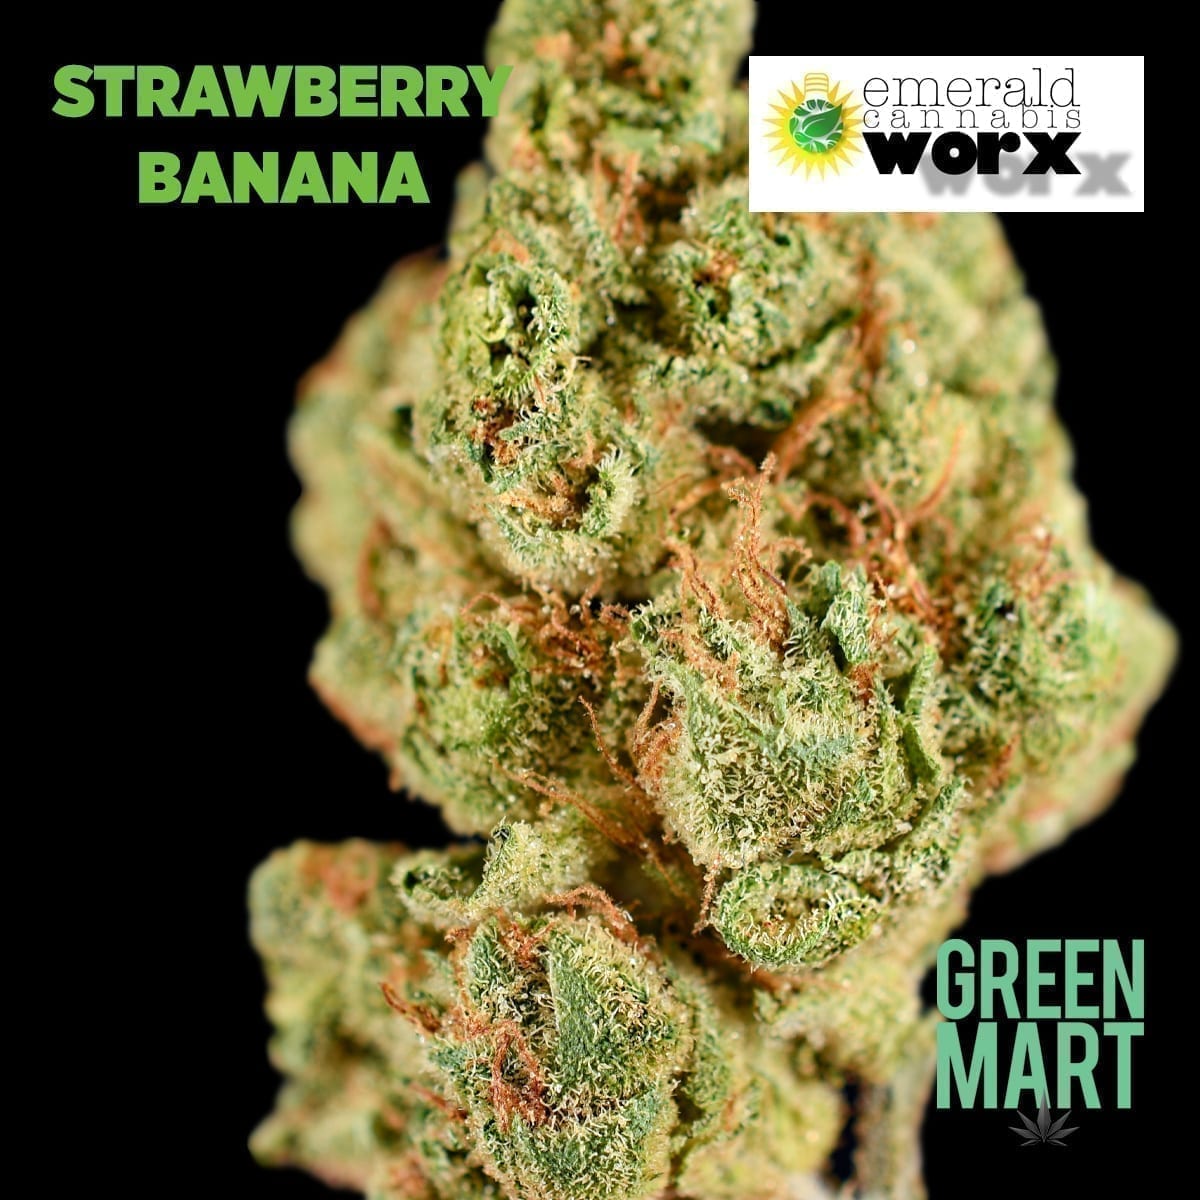 Strawberry Banana by Emerald Cannabis Worx